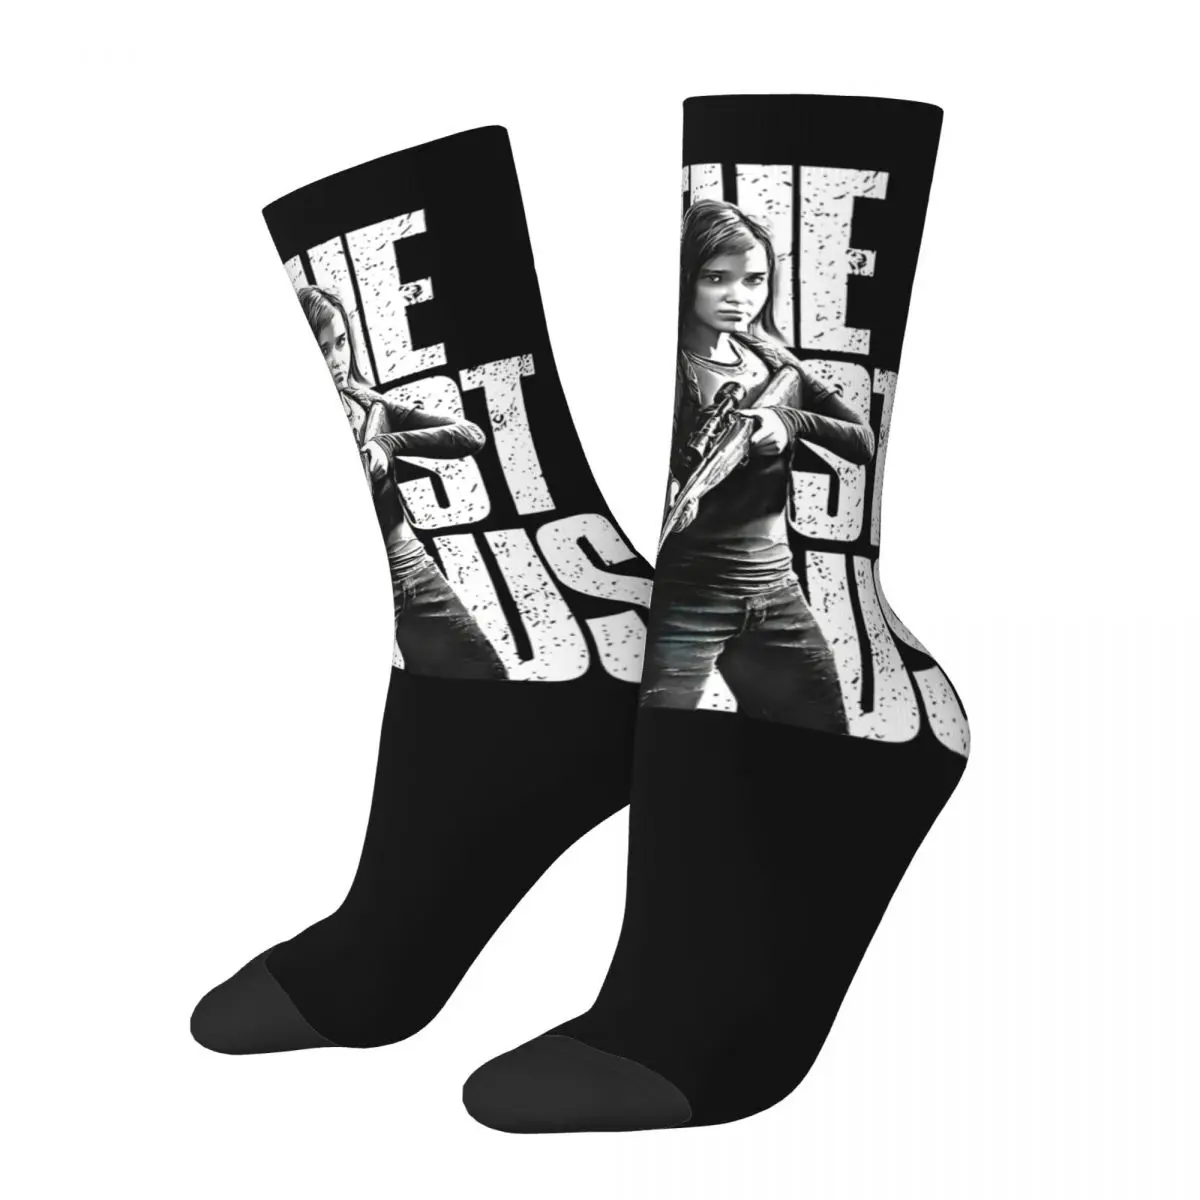 

Retro Unisex The Last Of Us Cool Black Theme Socks Merch Soccer Socks Super Soft Best Gifts